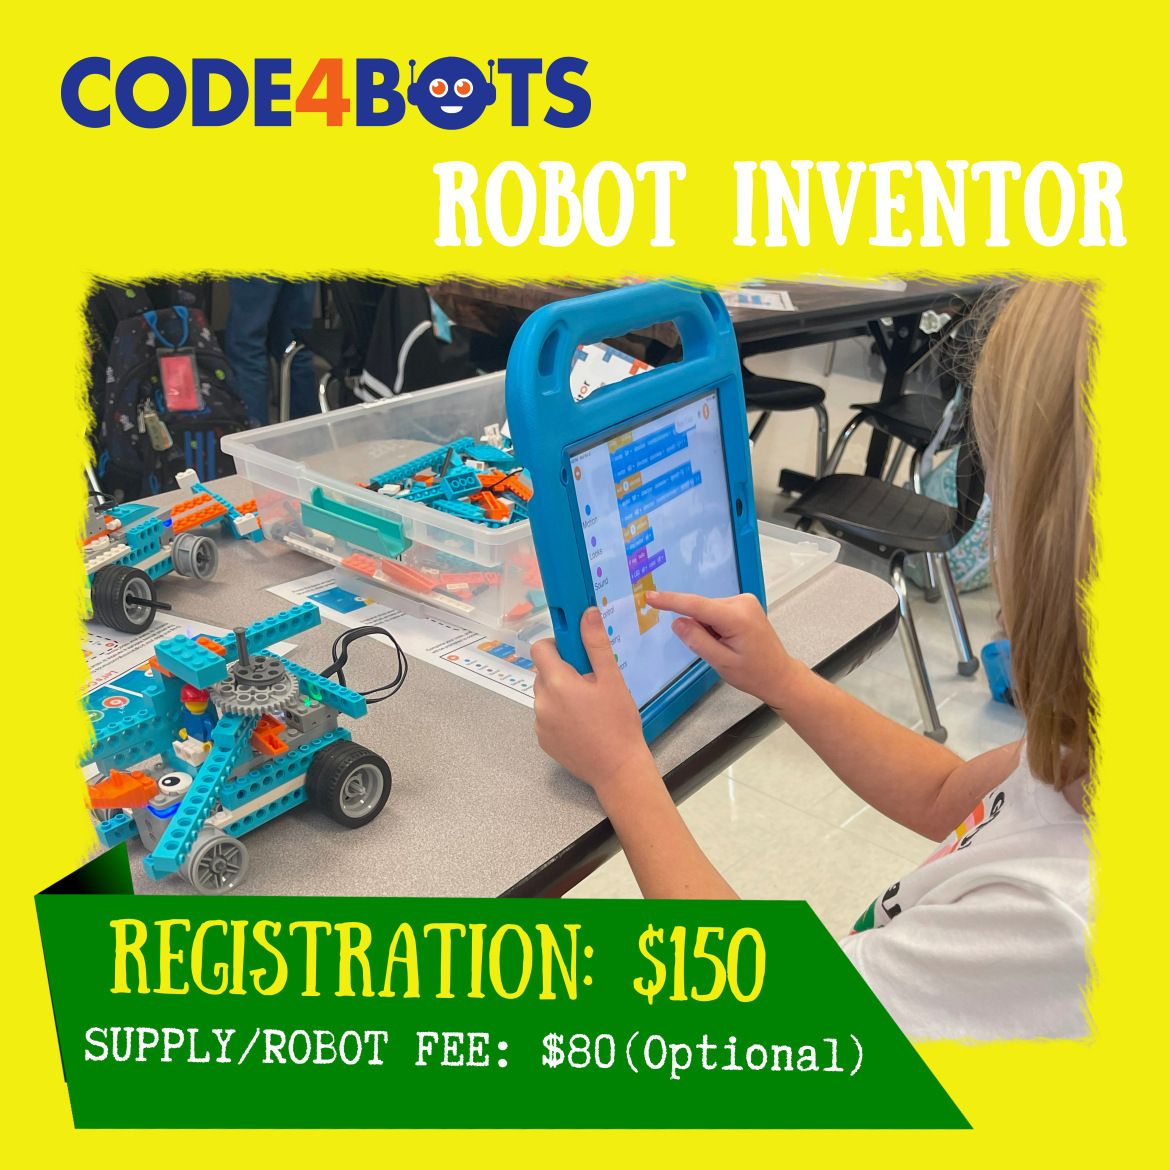 Code4Bots Robot Inventor After-School Robotics Classes at Timberwood Park Elementary